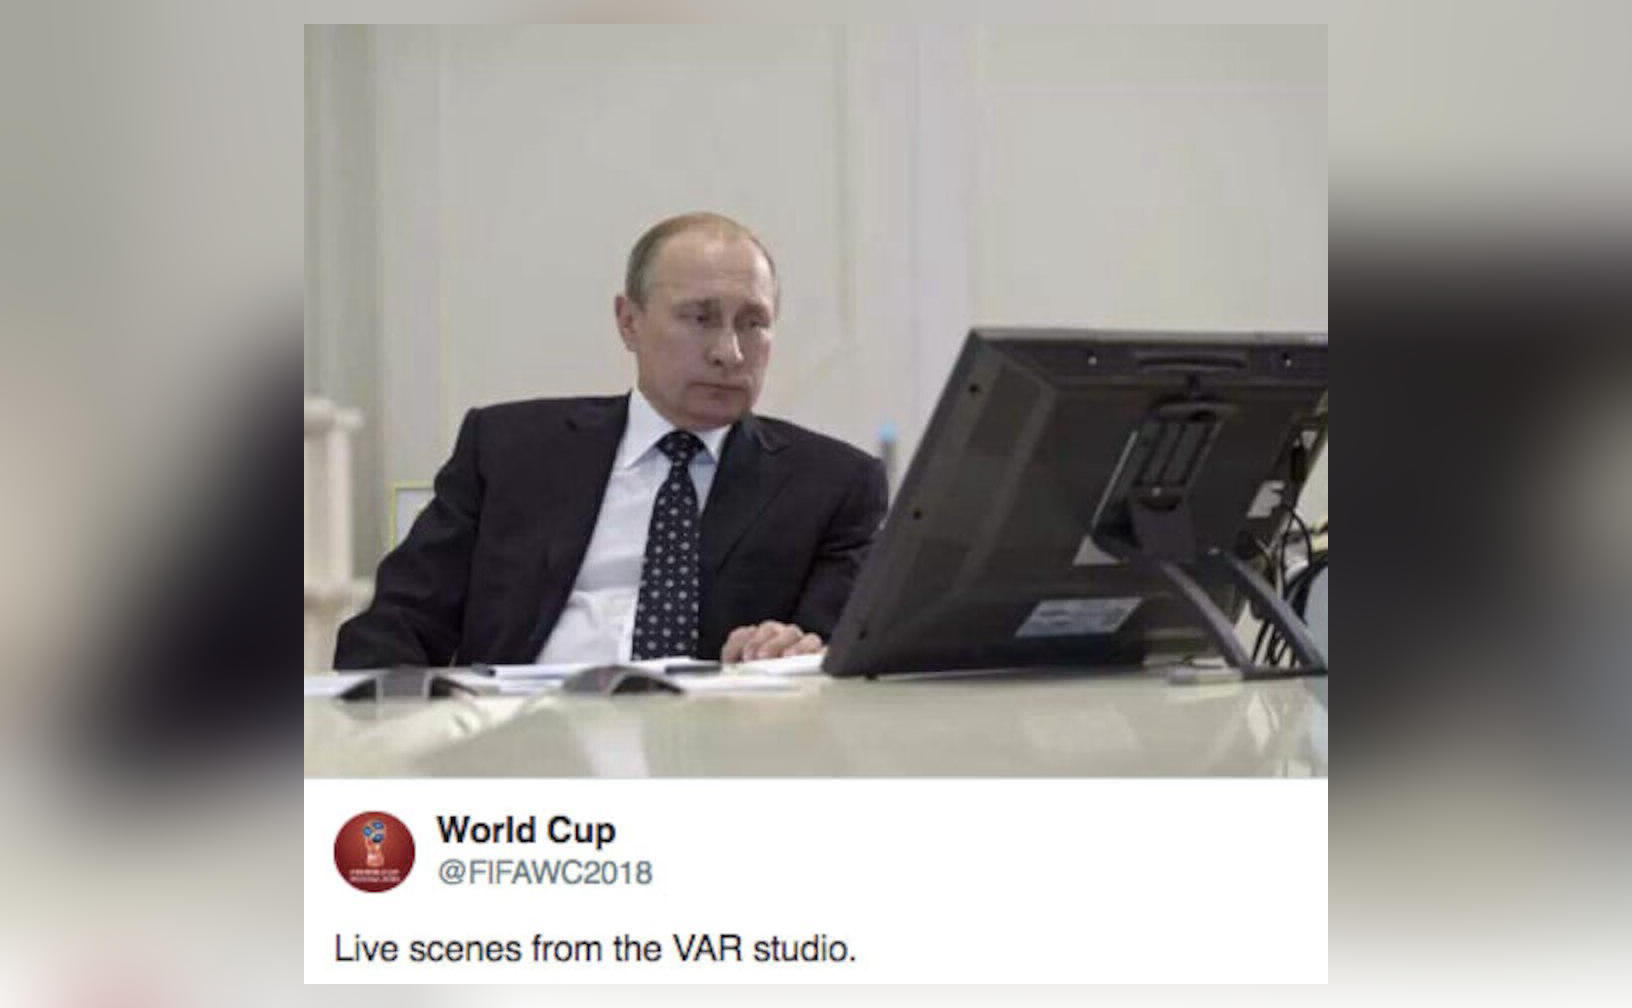 Is Mr Putin operating VAR !?: Michael Vaughan tweets #Cricket #England #MichaelVaugha #VladimirPutin #Football #WordCup